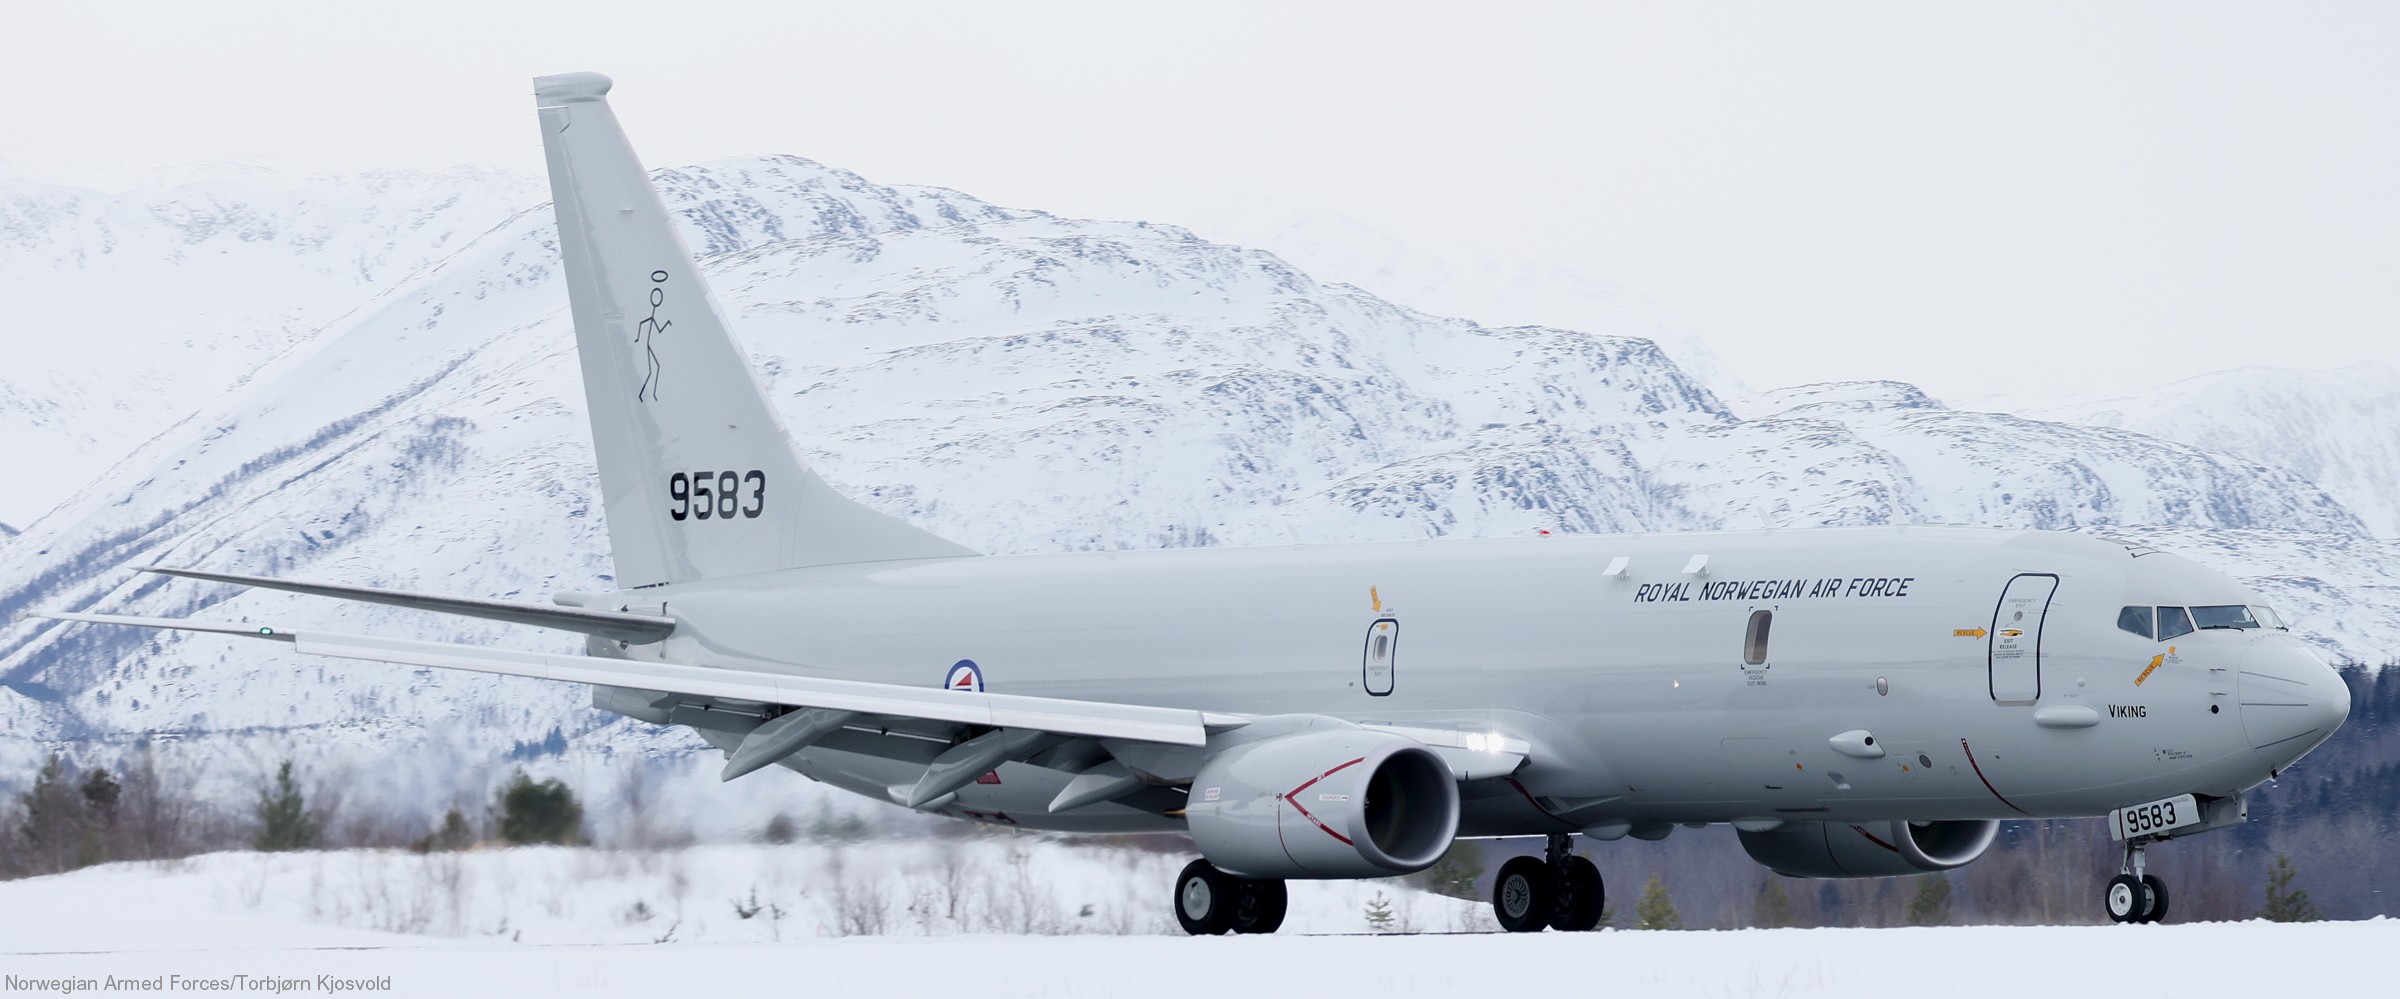 p-8a poseidon maritime patrol aircraft royal norwegian air force luftforsvaret 9583 viking 17